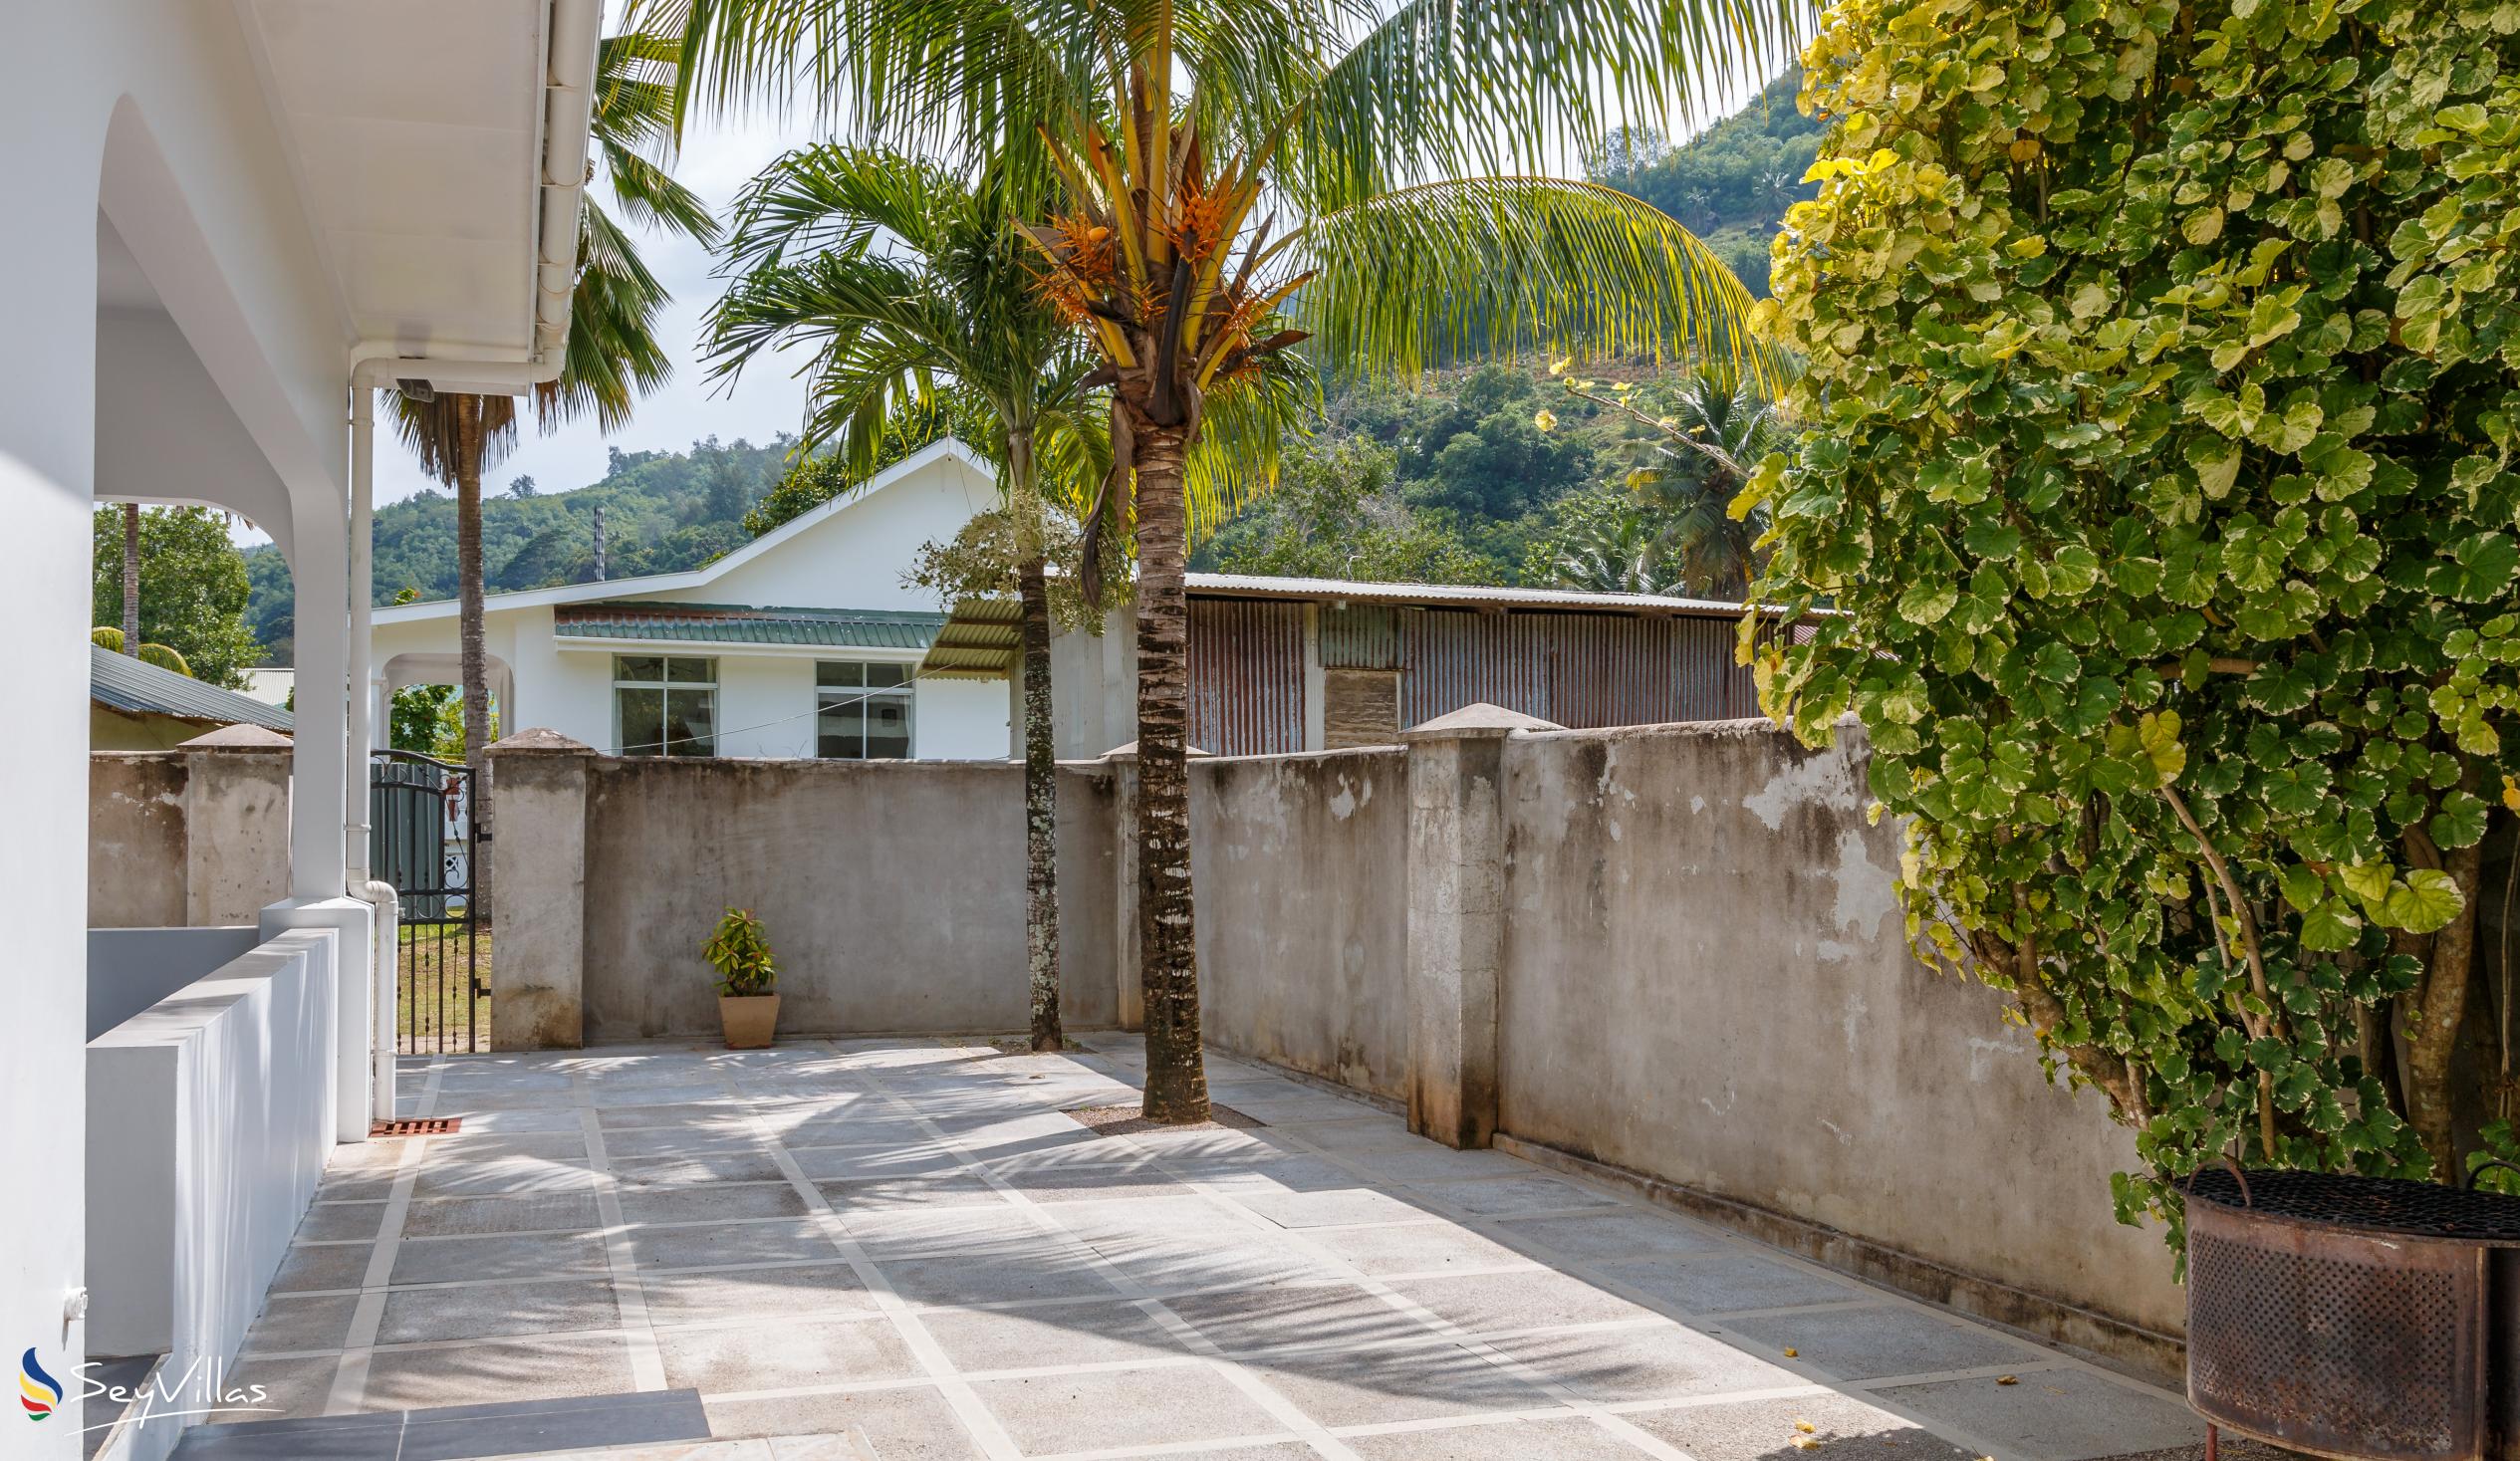 Foto 10: Coco Blanche (Maison Coco) - Aussenbereich - Mahé (Seychellen)